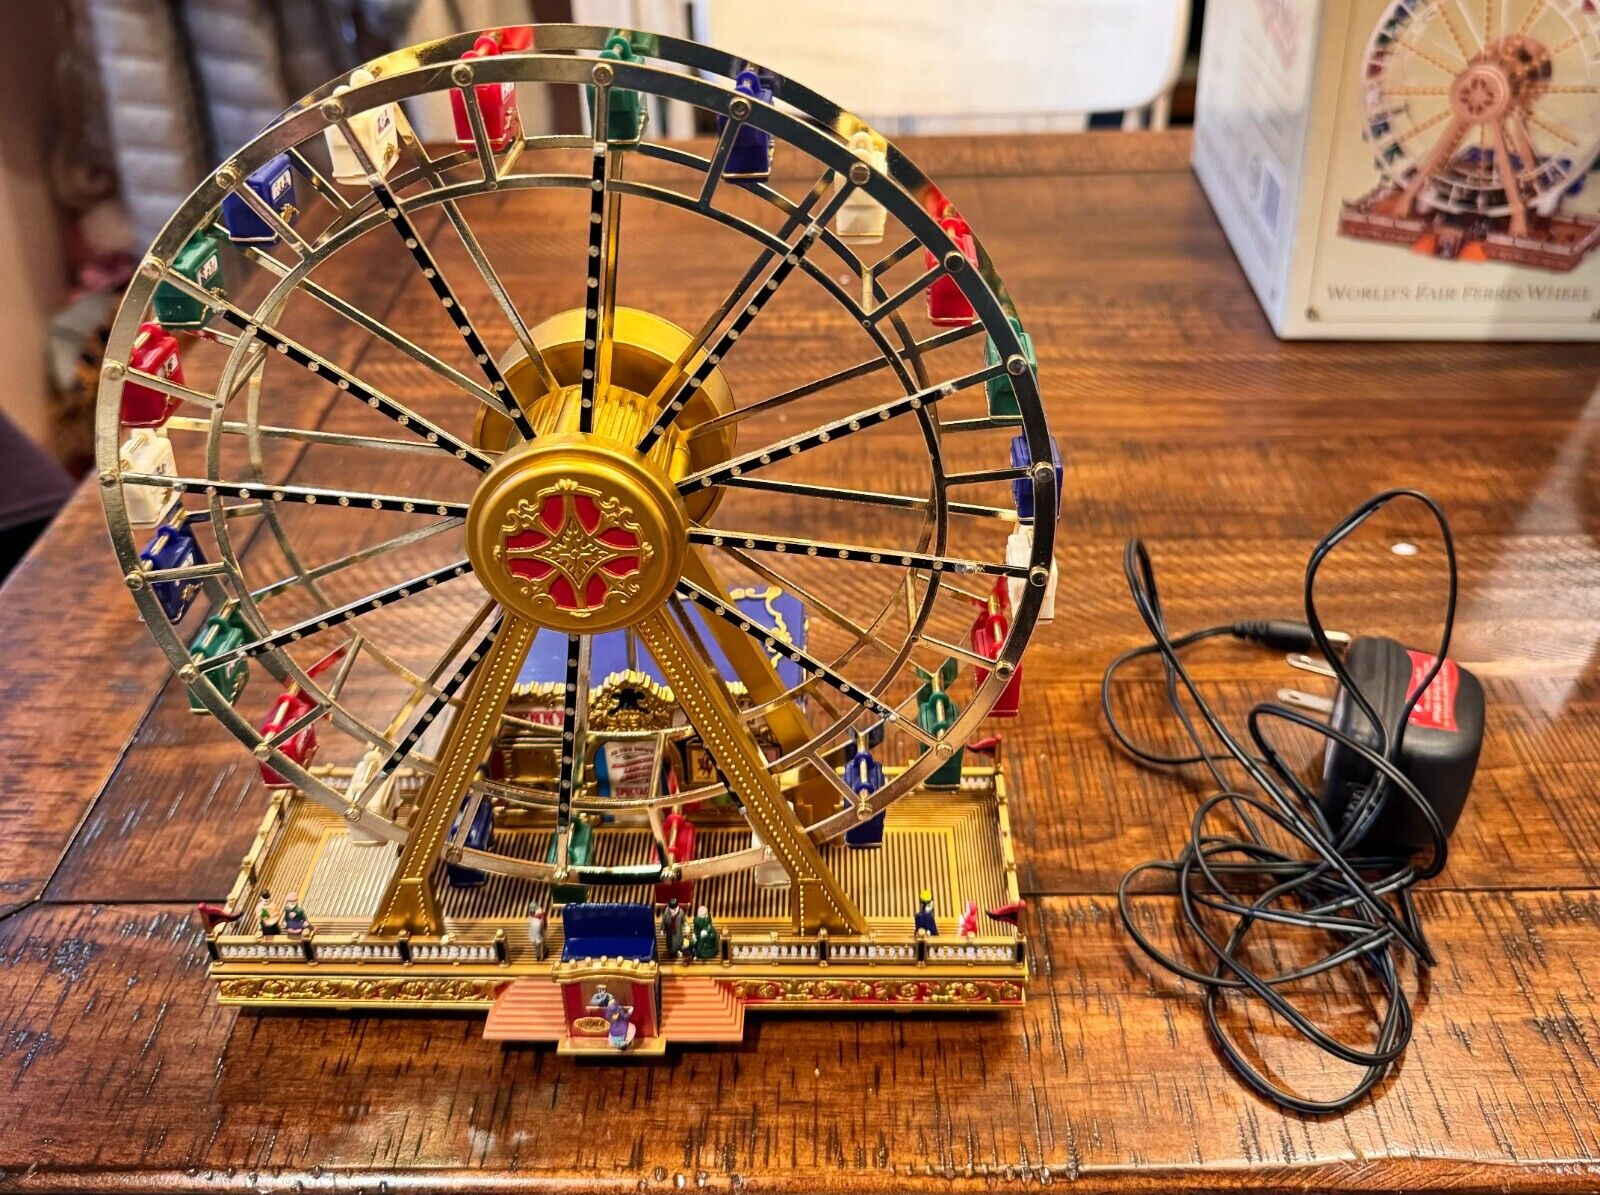 Mr Christmas Gold Label World's Fair Ferris Wheel- Lights, Motion, Music